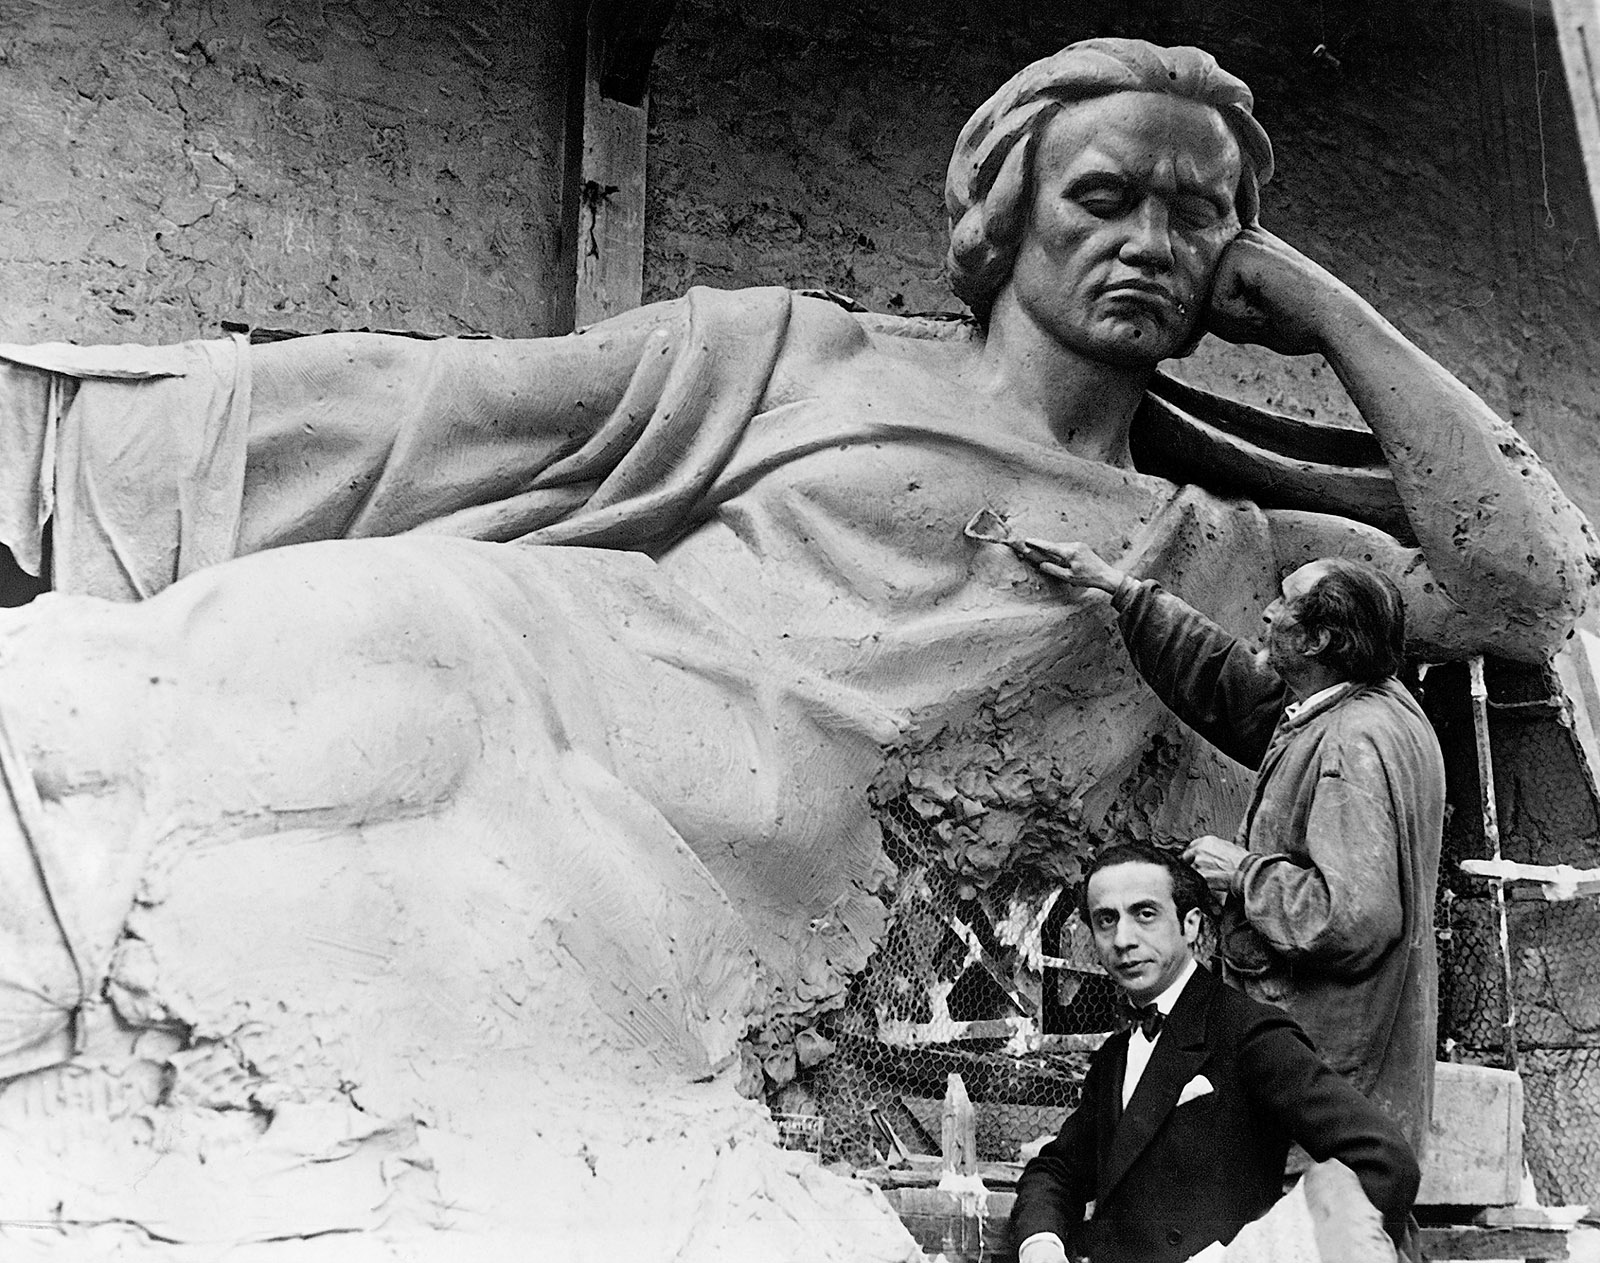 Jean-Marie Mengue working on his sculpture of Beethoven in the Bois de Vincennes, Paris, 1927